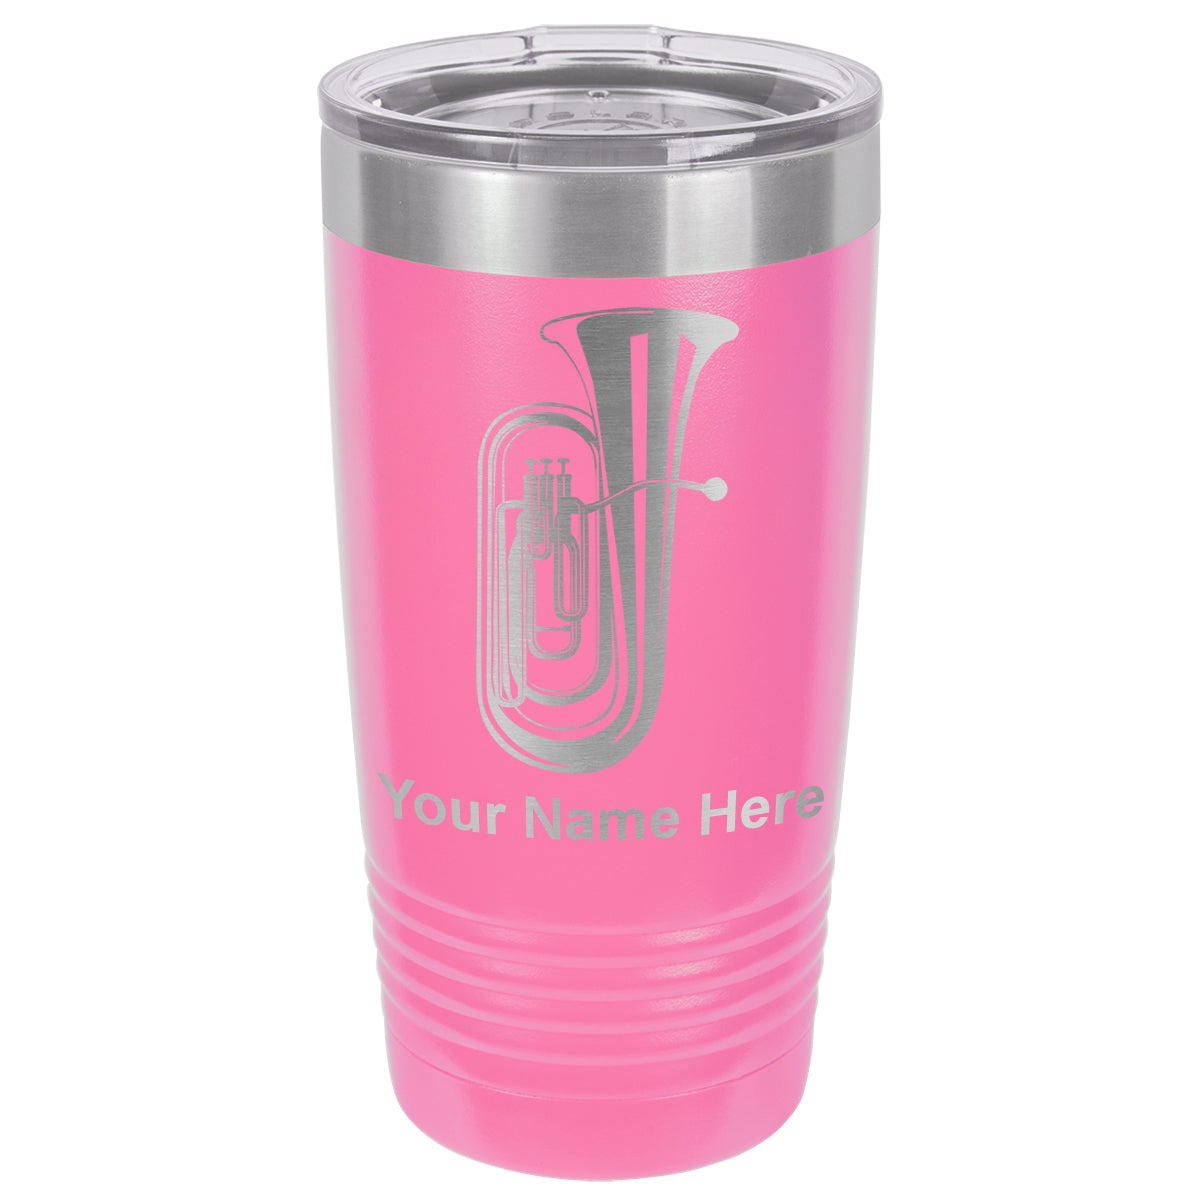 20oz Vacuum Insulated Tumbler Mug, Tuba, Personalized Engraving Included